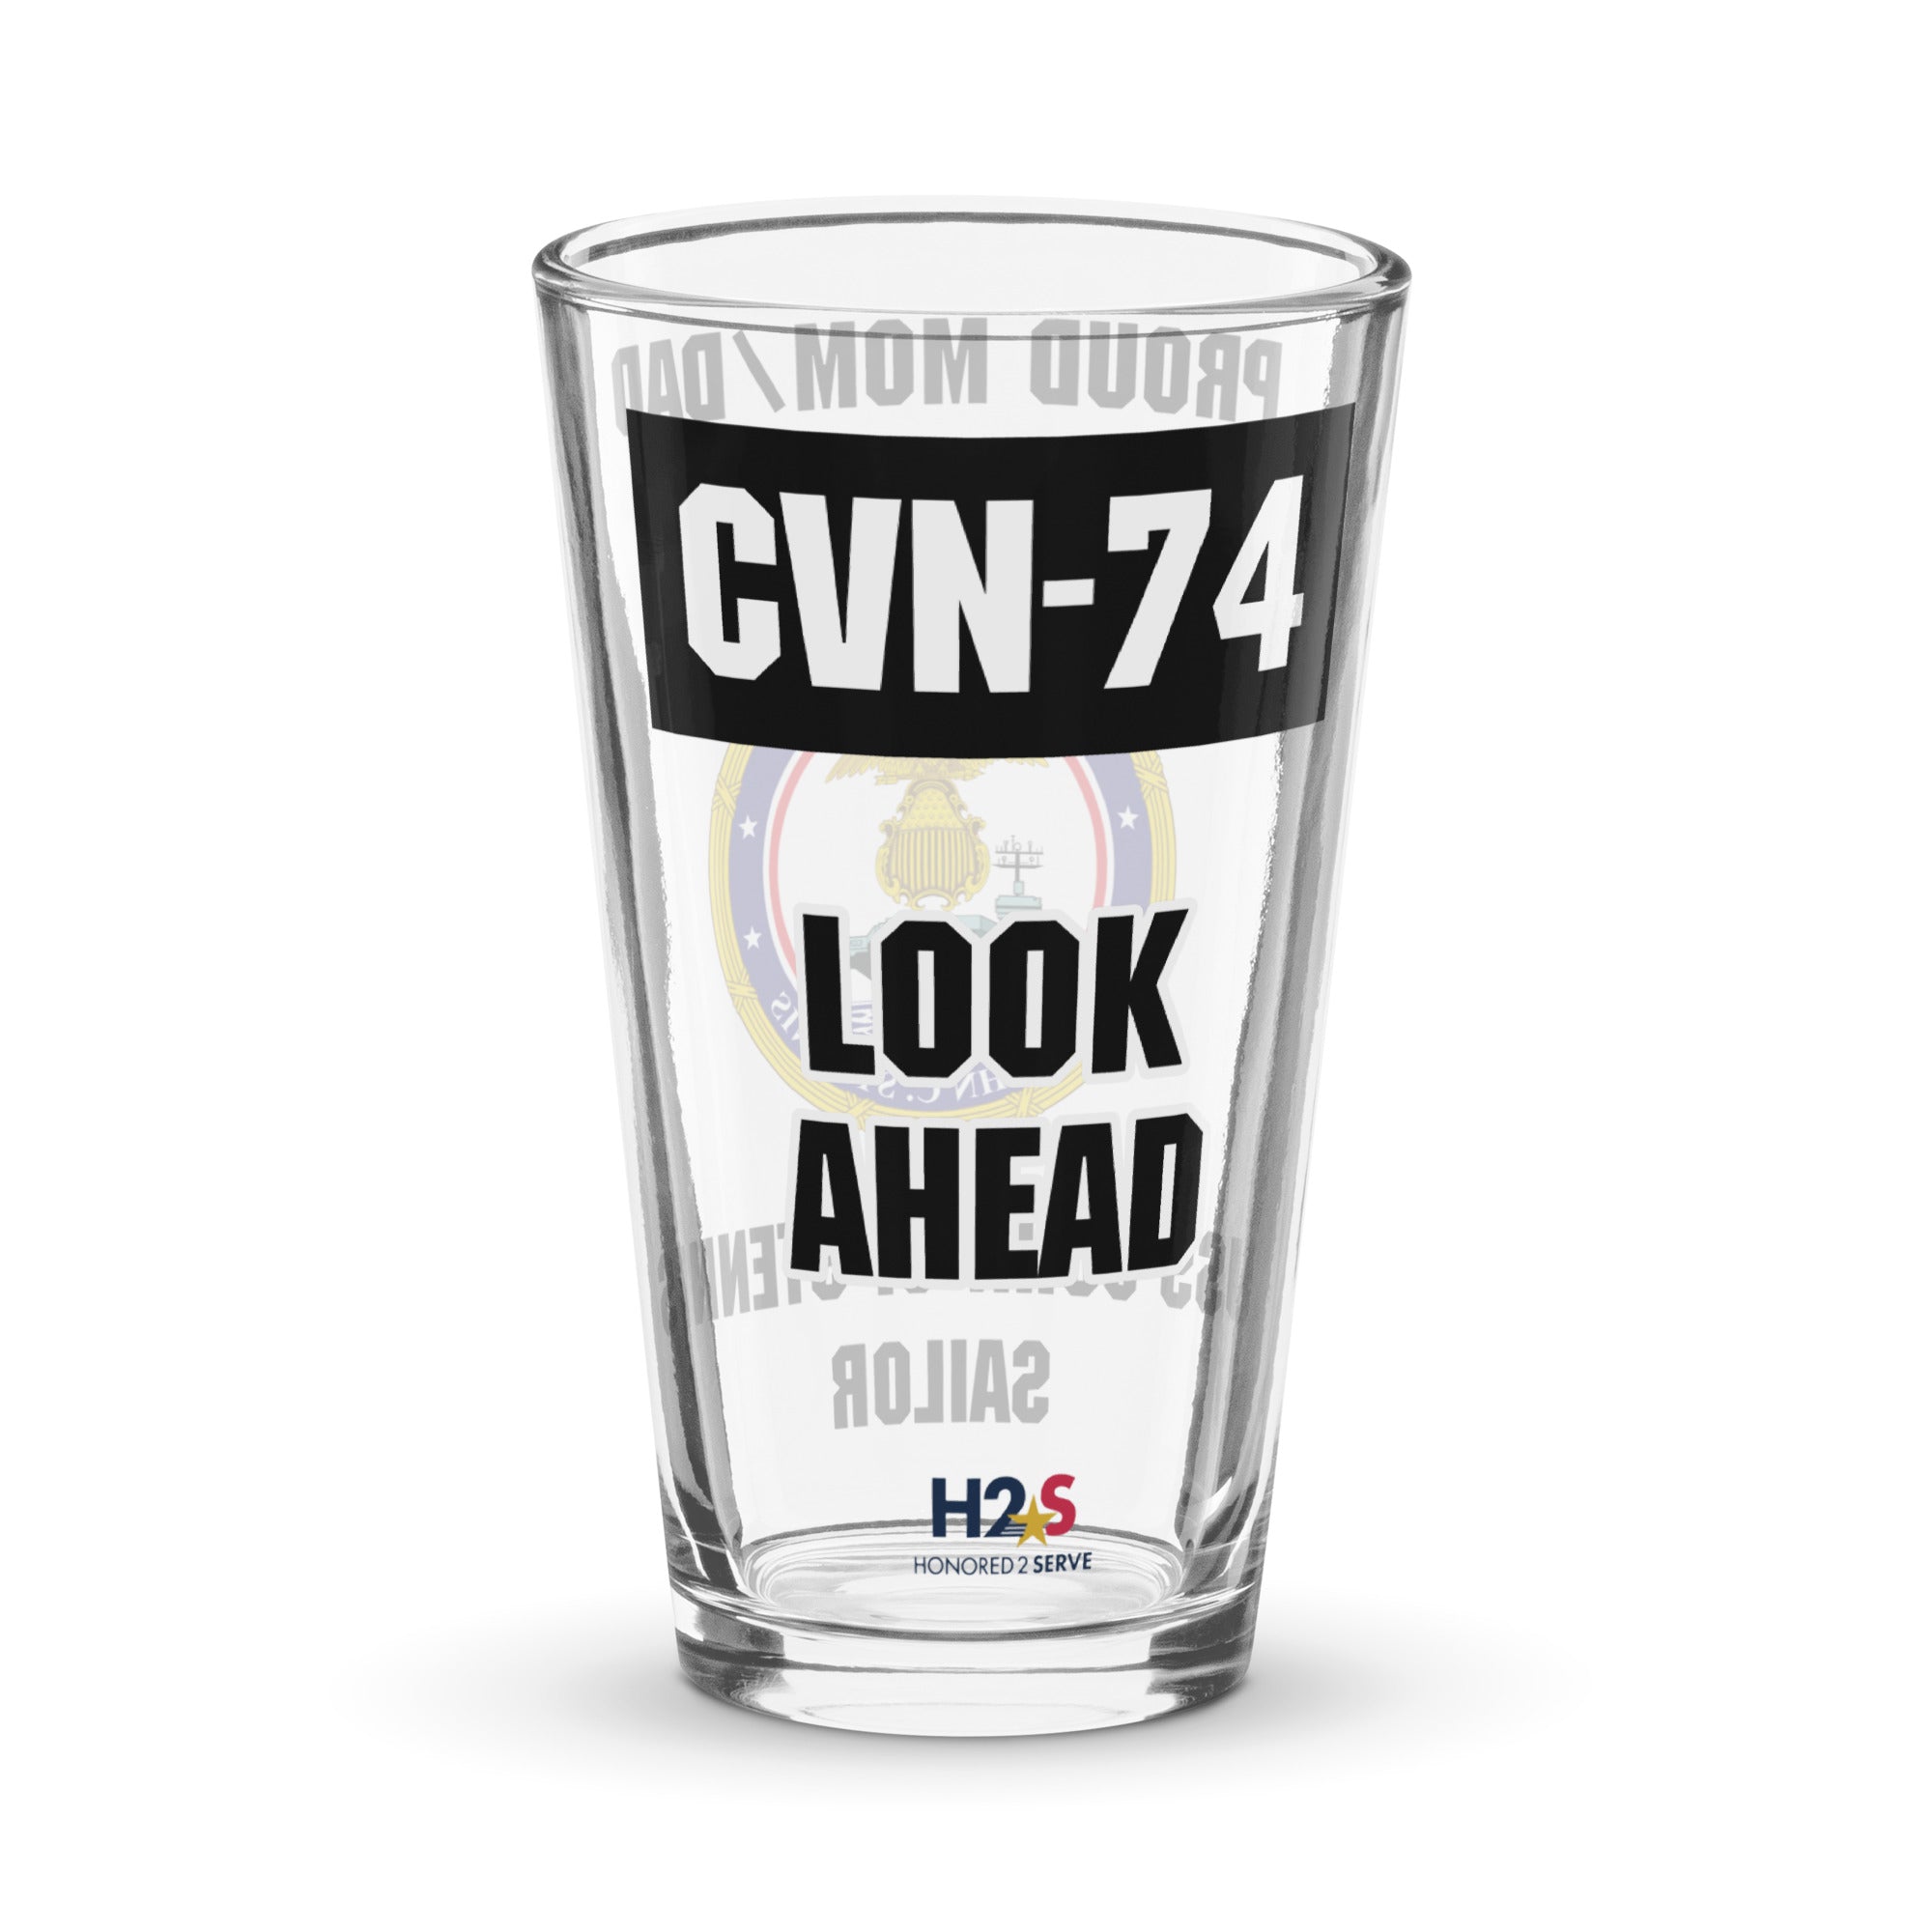 Customizable USS JOHN C. STENNIS Shaker pint glass